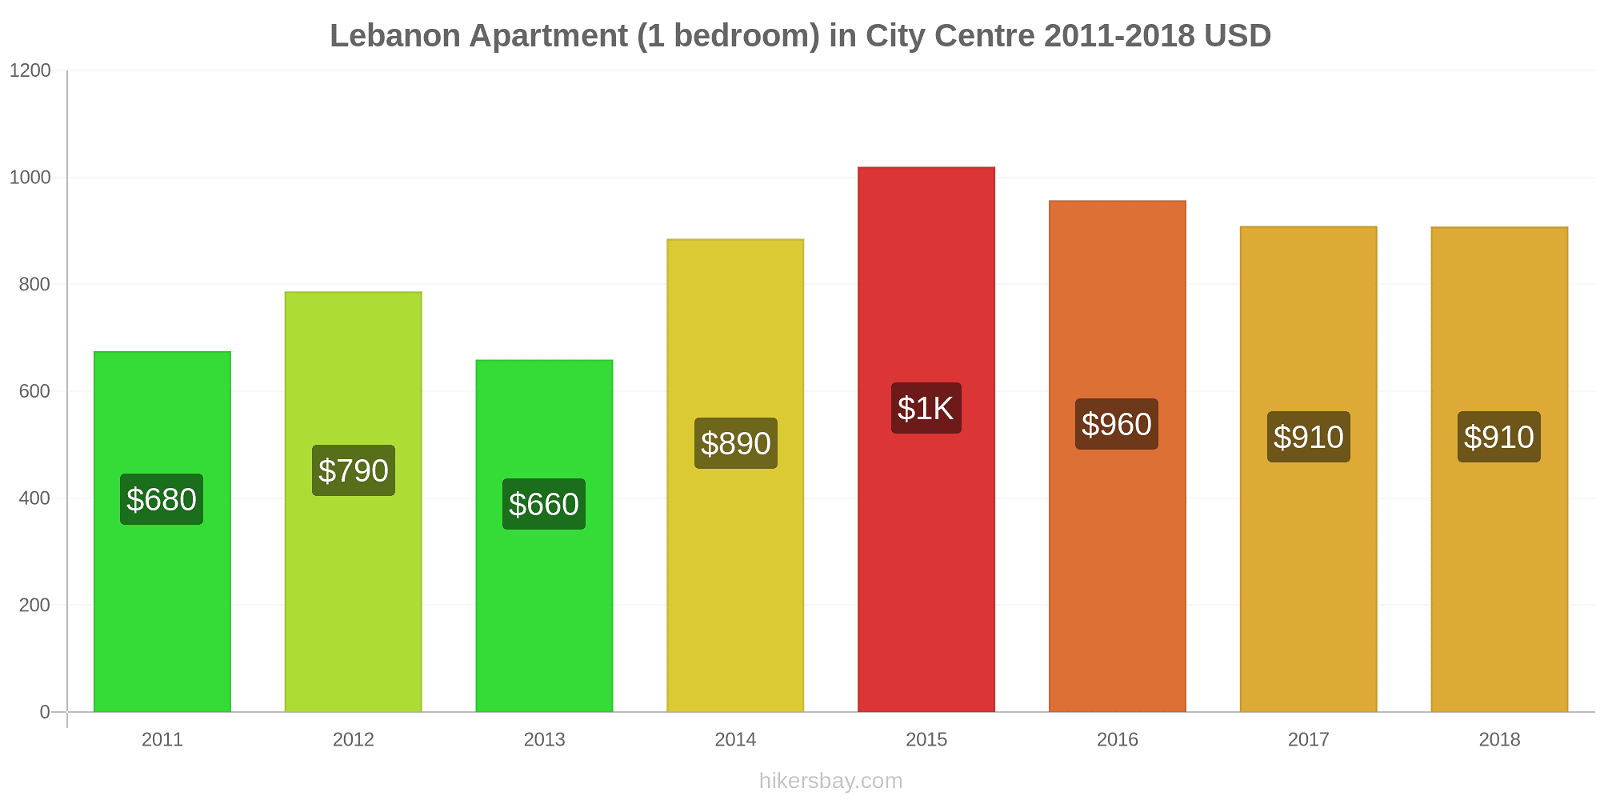 Lebanon price changes Apartment (1 bedroom) in city centre hikersbay.com